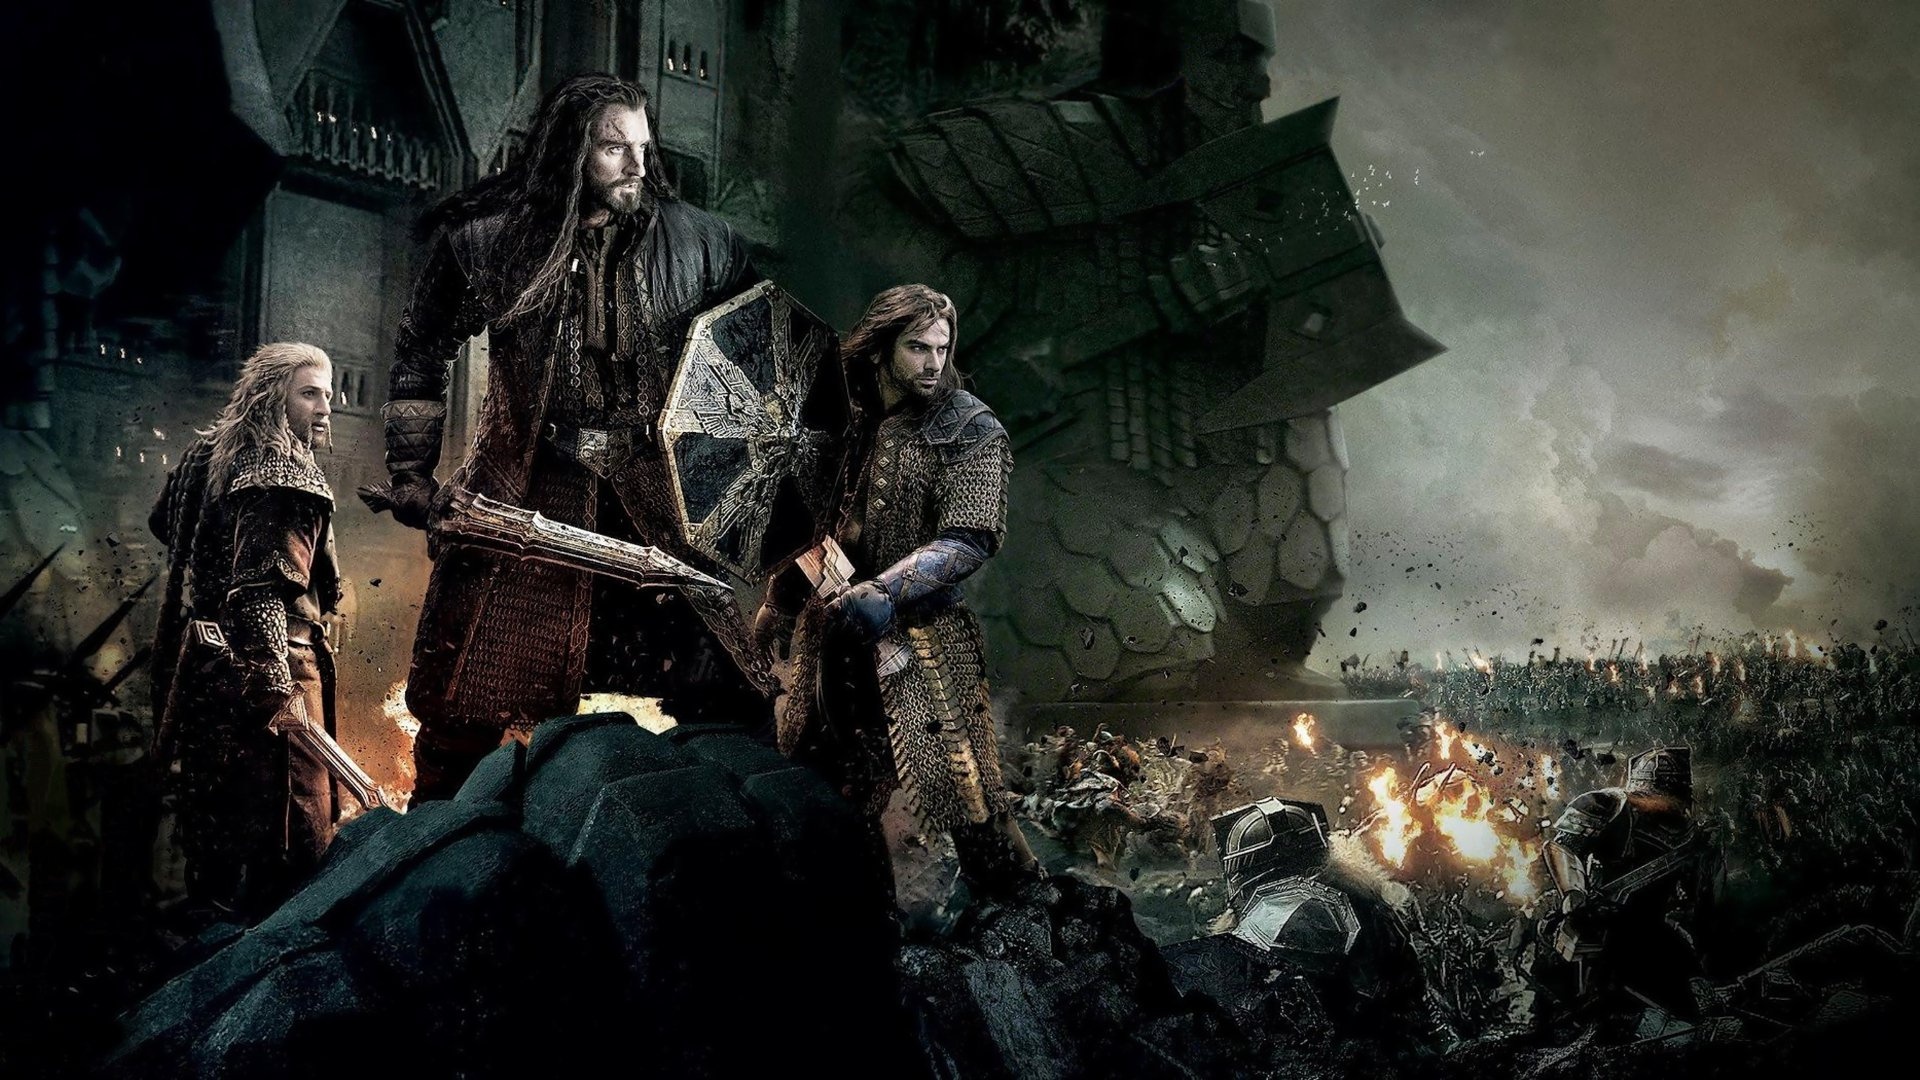 Battle of the Five Armies, Hobbit movie, HD background, Epic battle, 1920x1080 Full HD Desktop